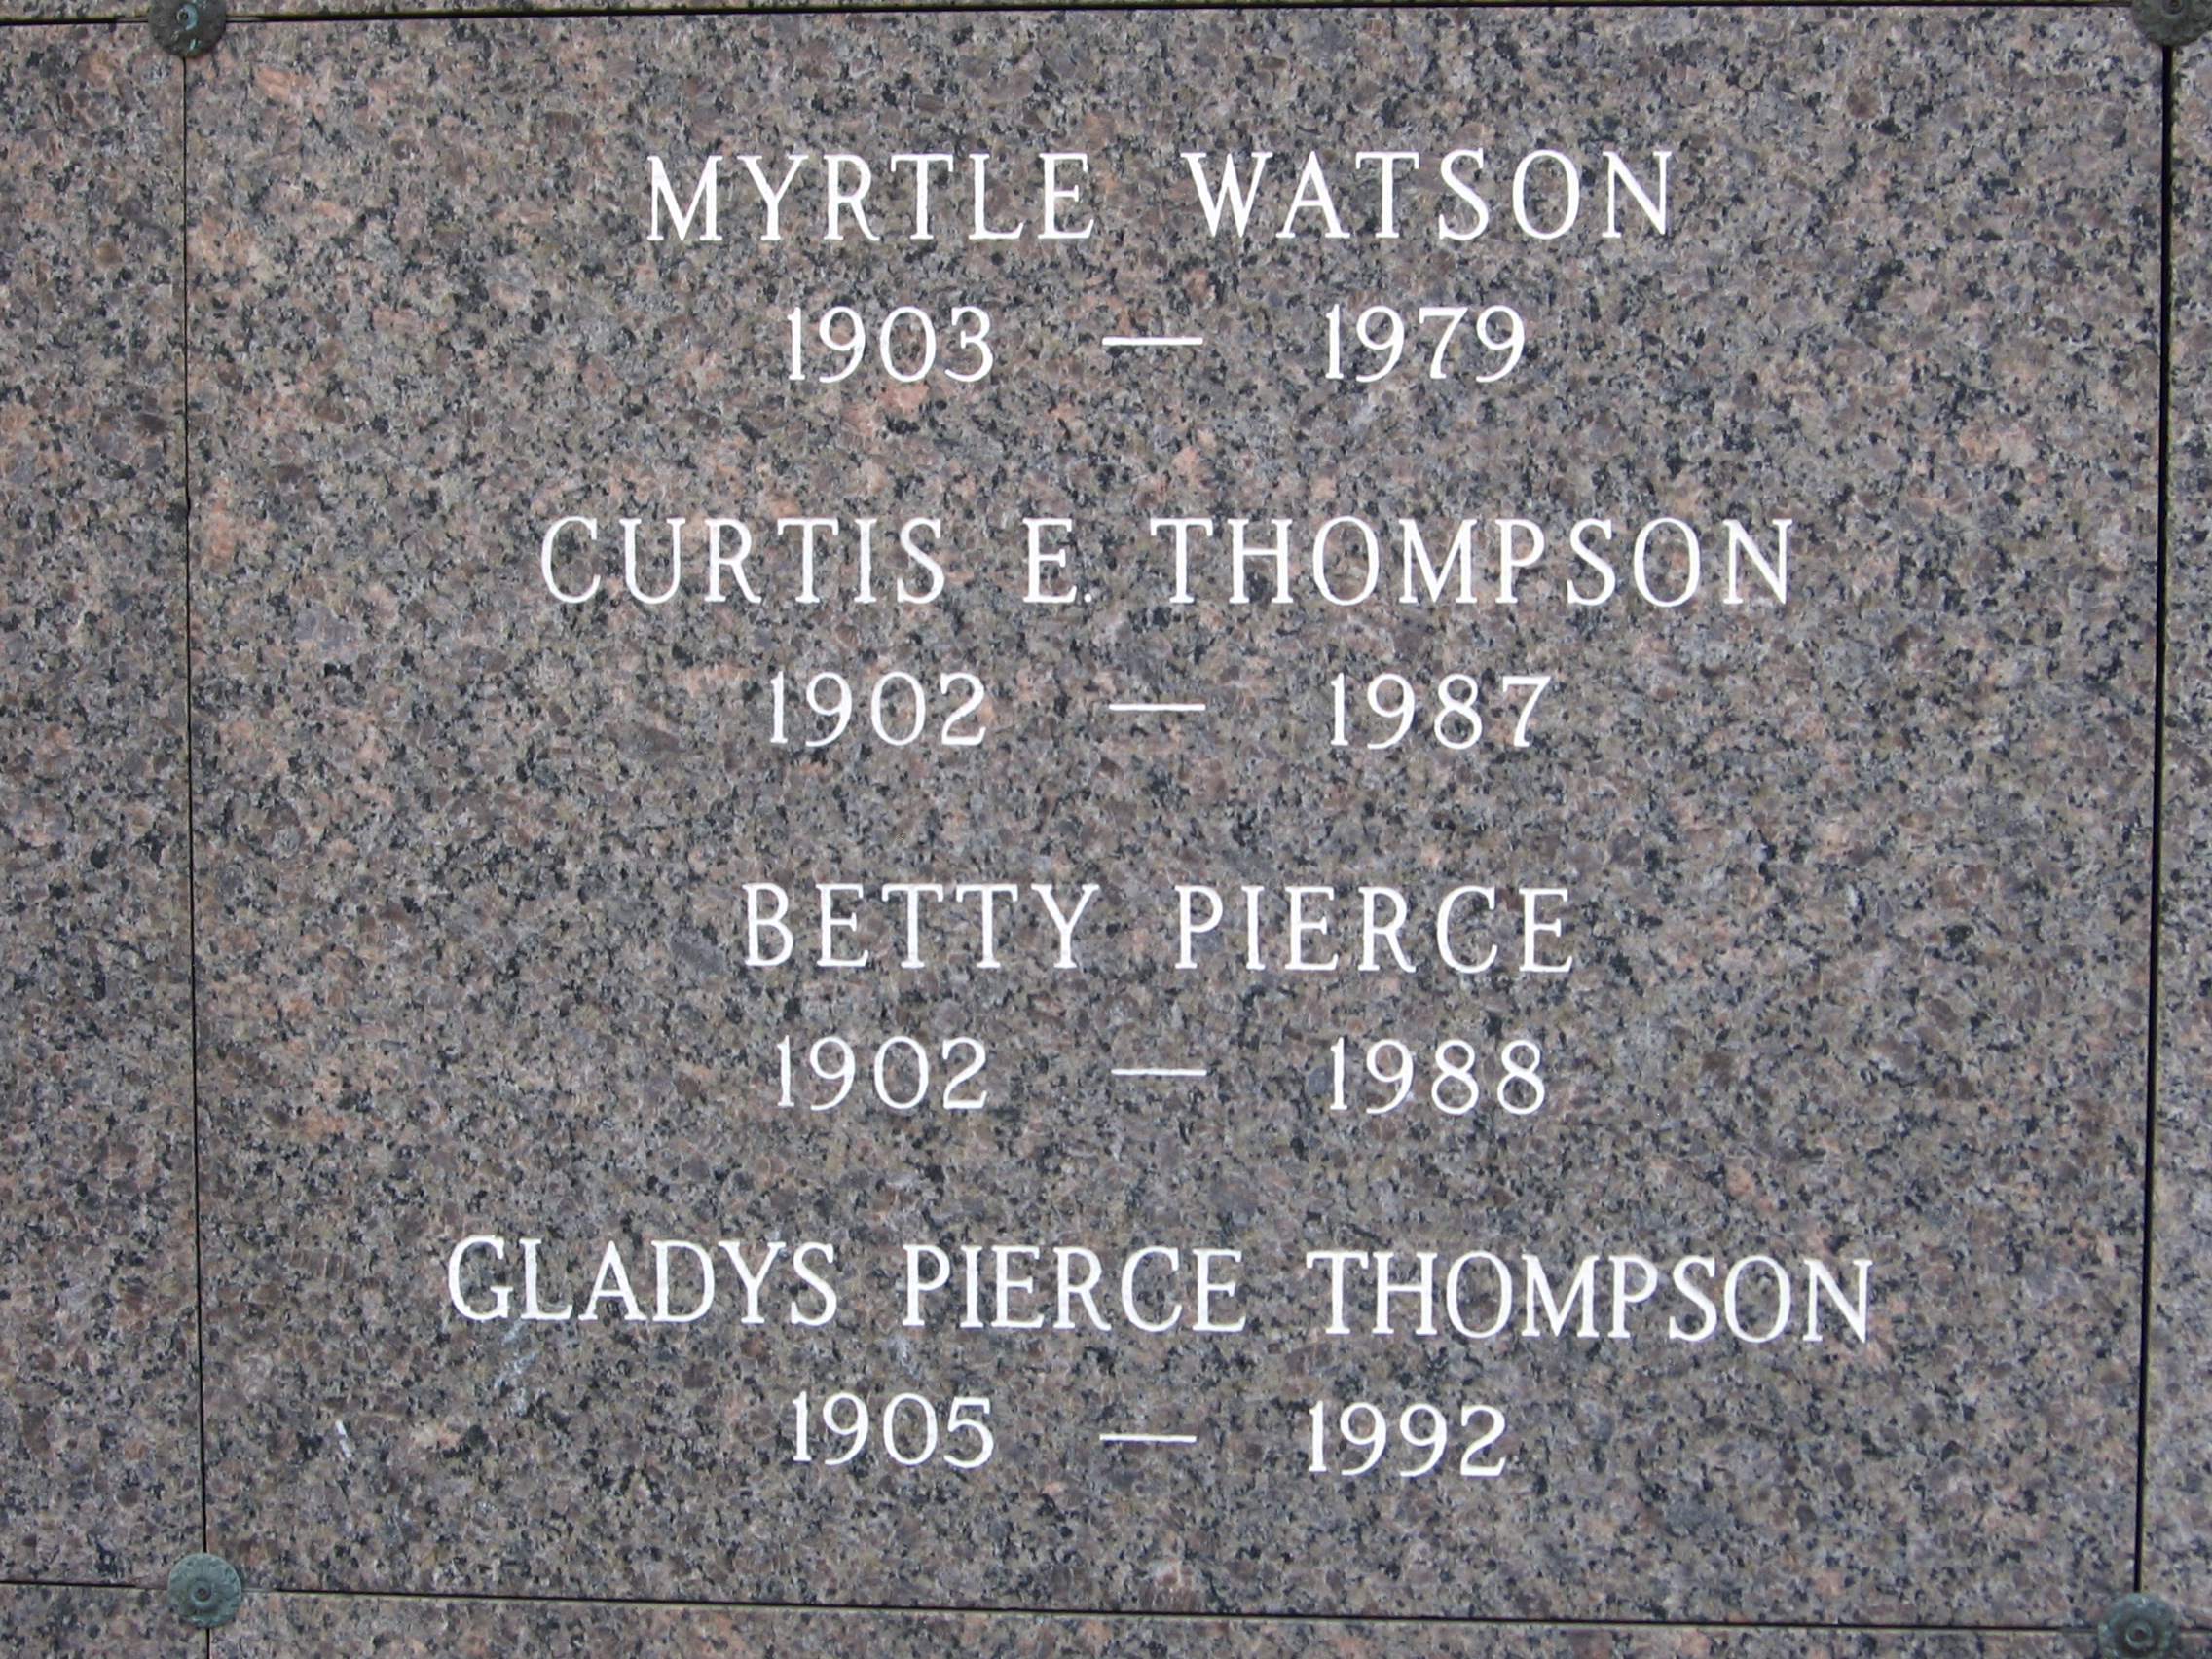 Gladys Pierce Thompson